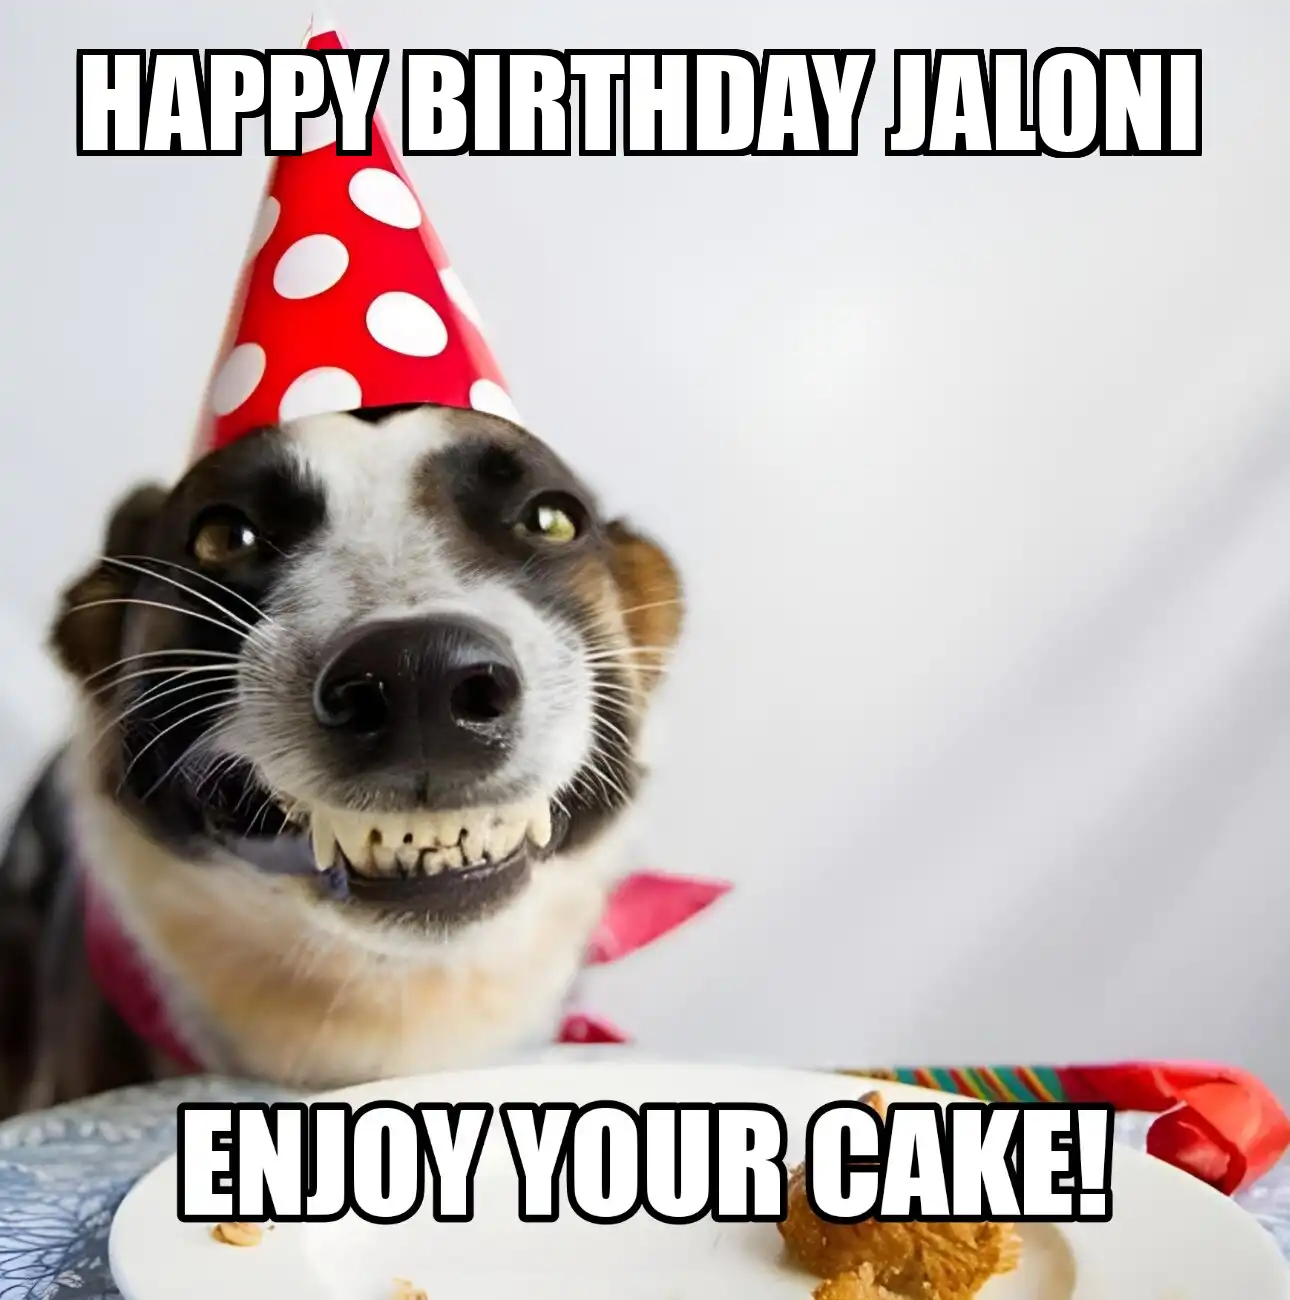 Happy Birthday Jaloni Enjoy Your Cake Dog Meme